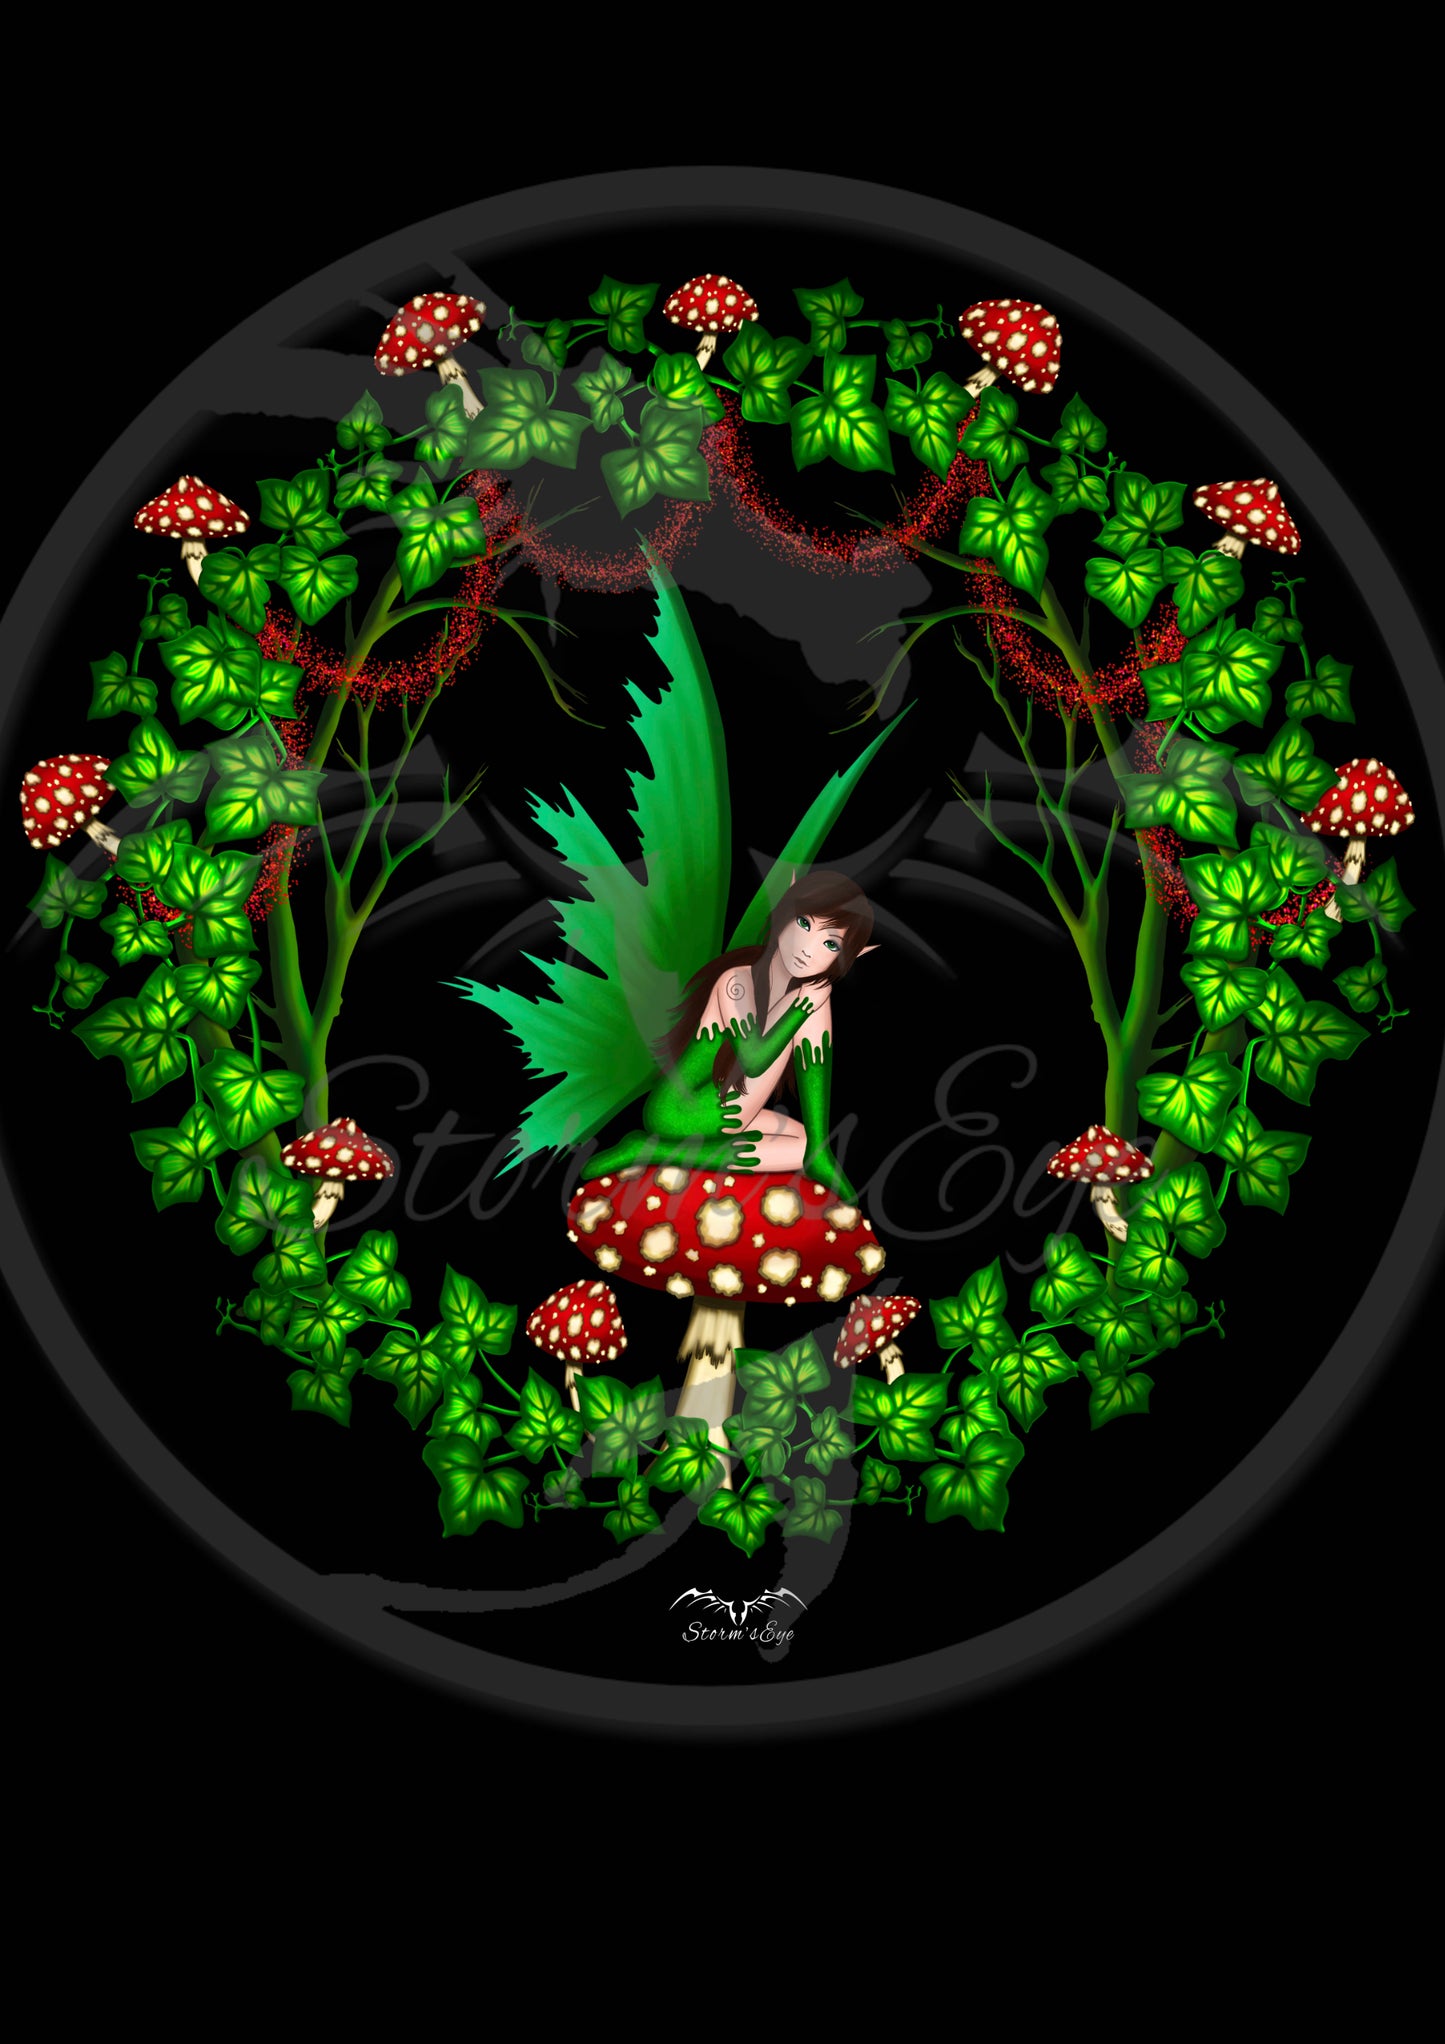 Mushroom Fairy design, by Stormseye Design